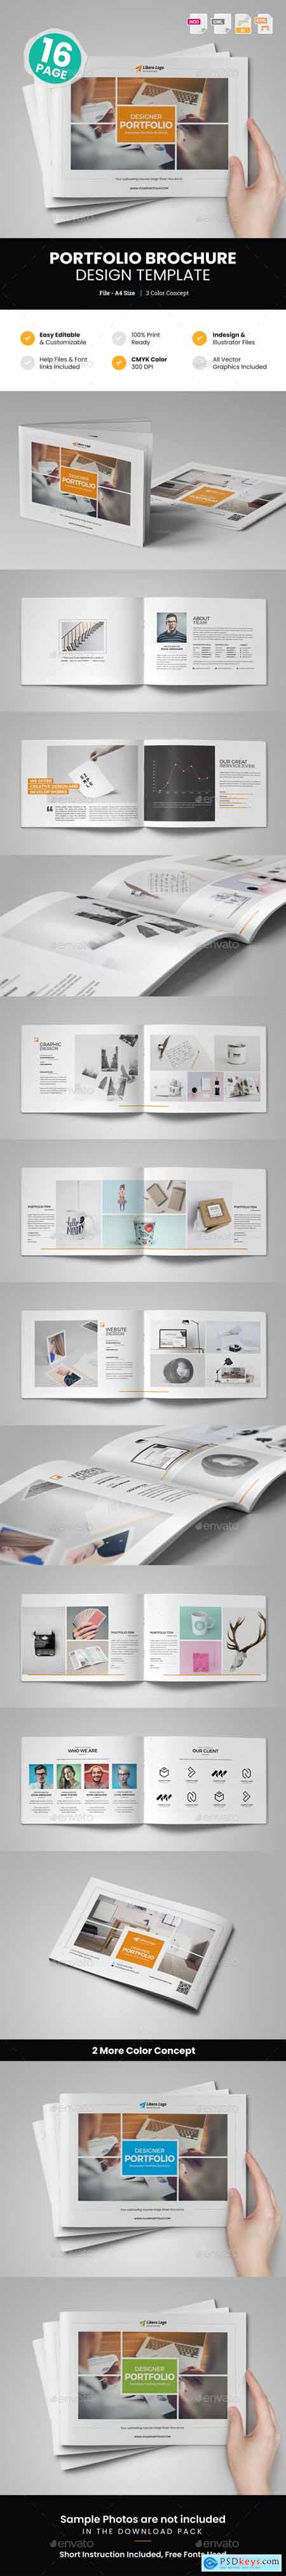 Portfolio Brochure Design v6